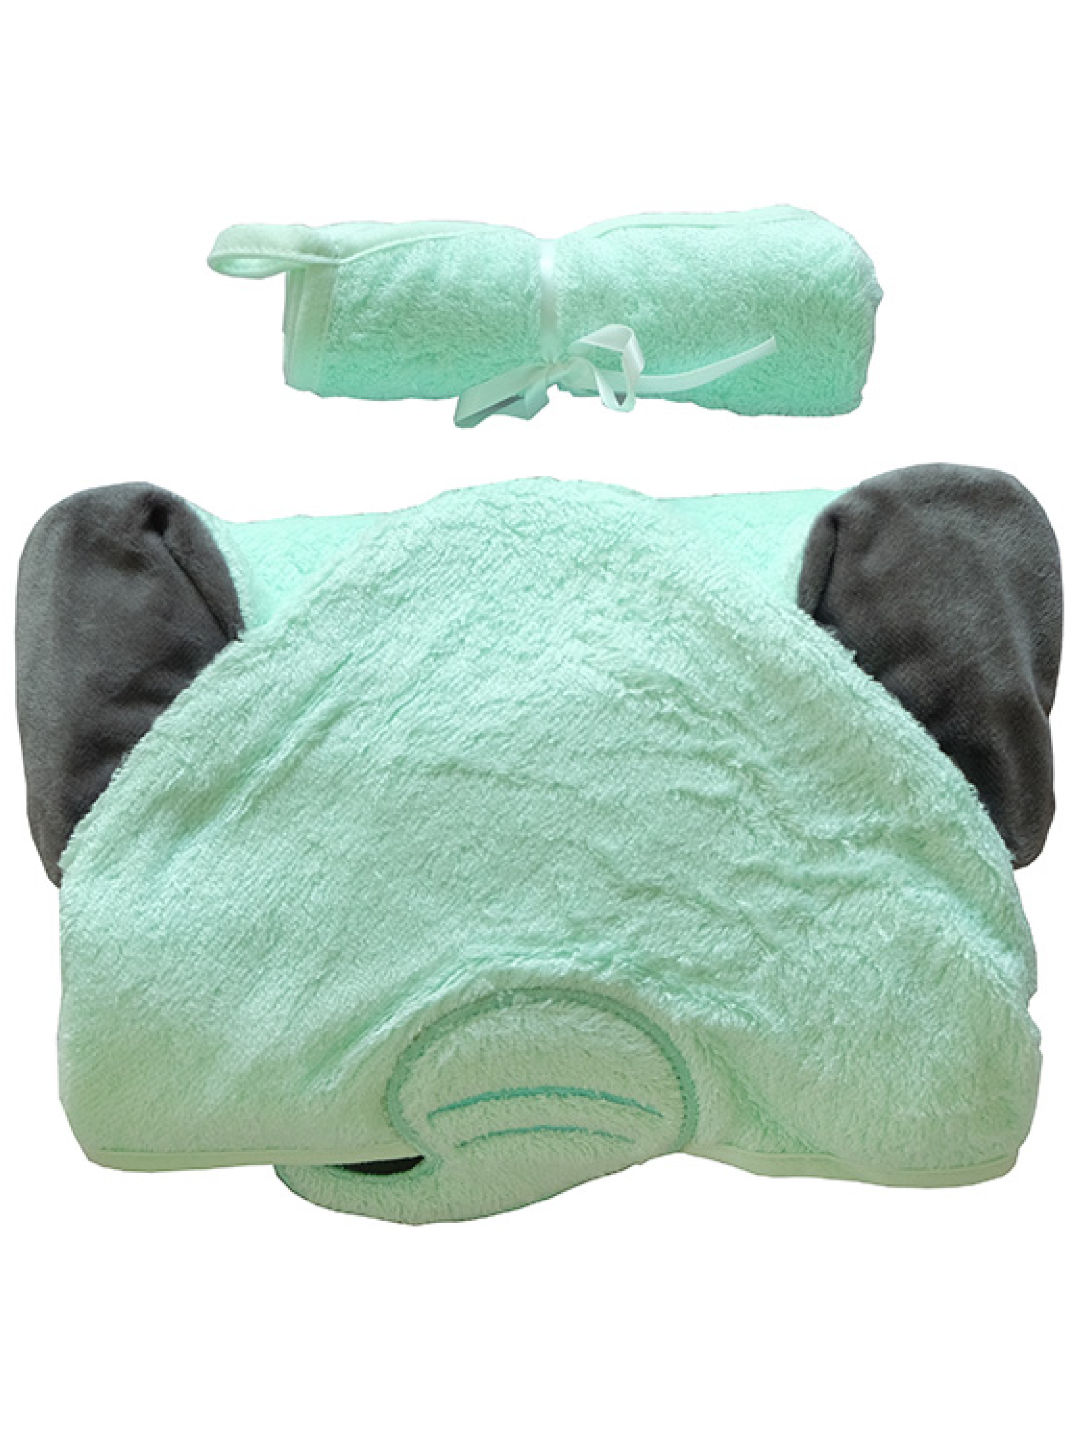 Nuborn Baby Essentials Bamboo Hooded Towel with Washcloth Set Elephant